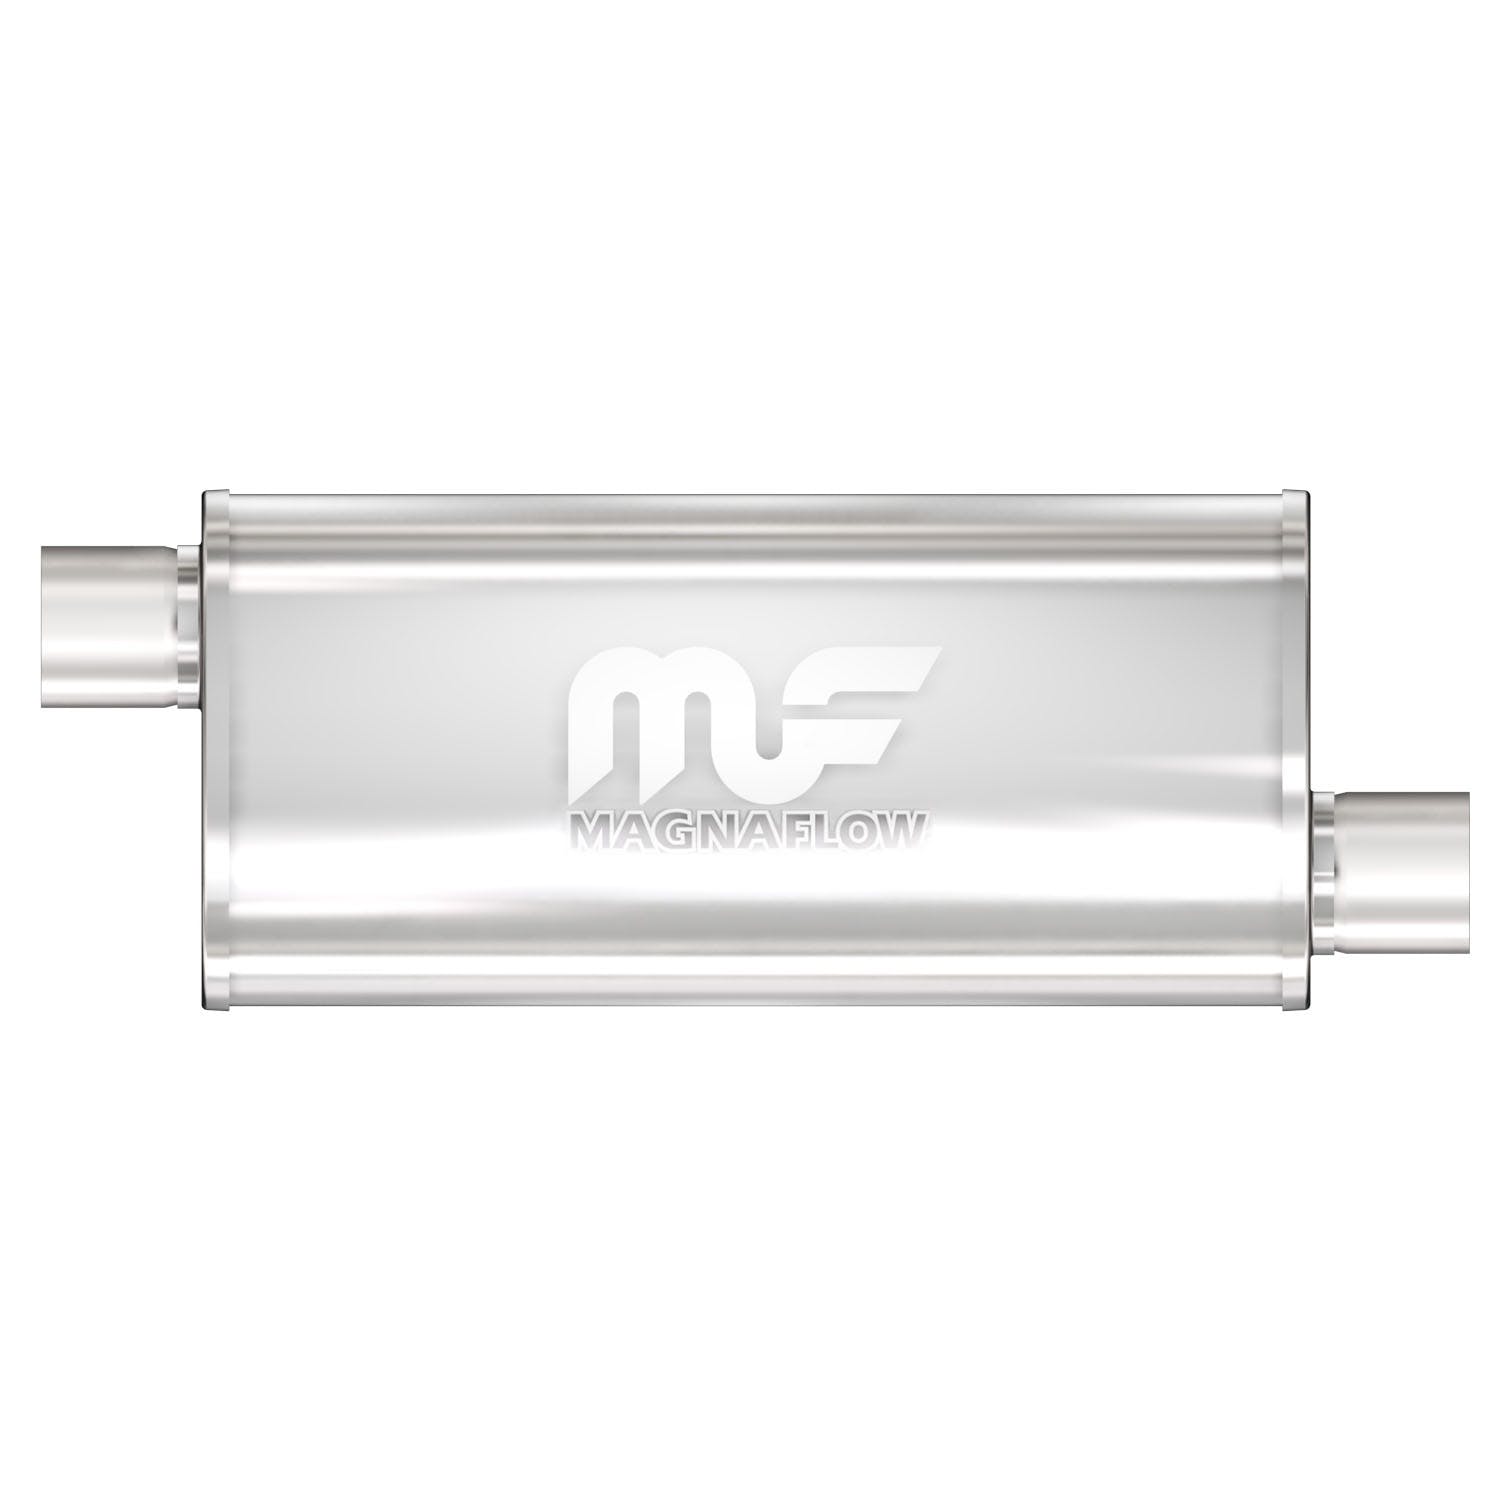 MagnaFlow Exhaust Products 14236 Universal Muffler